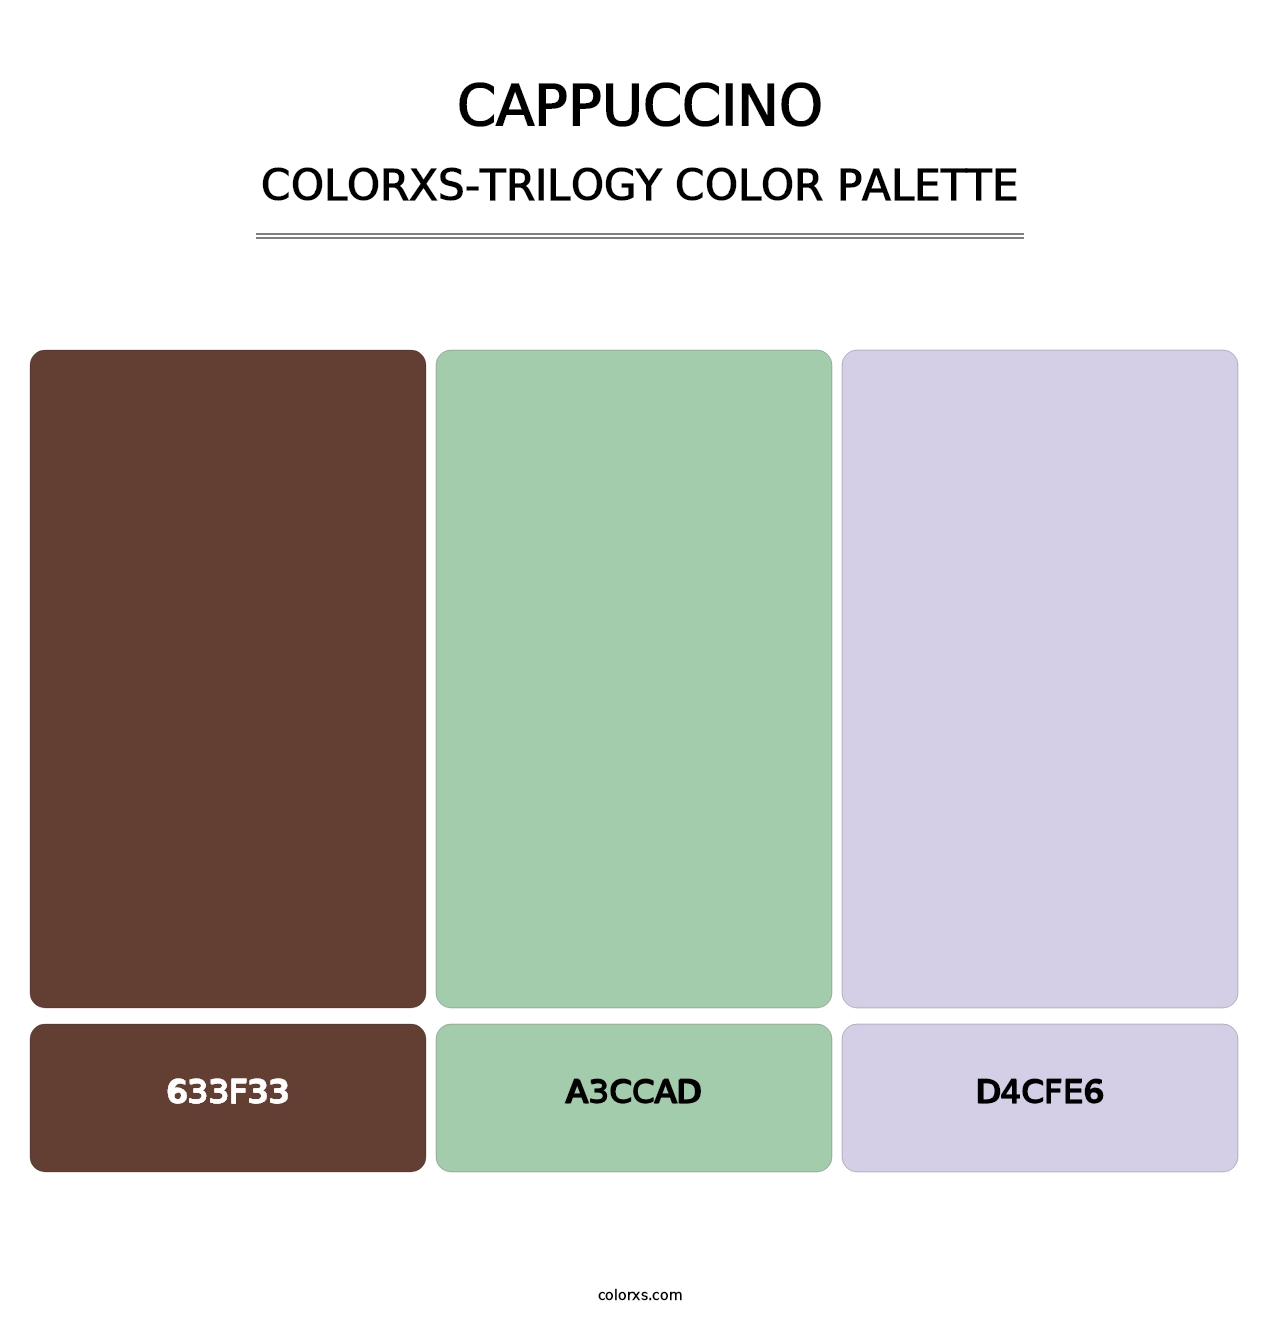 Cappuccino - Colorxs Trilogy Palette